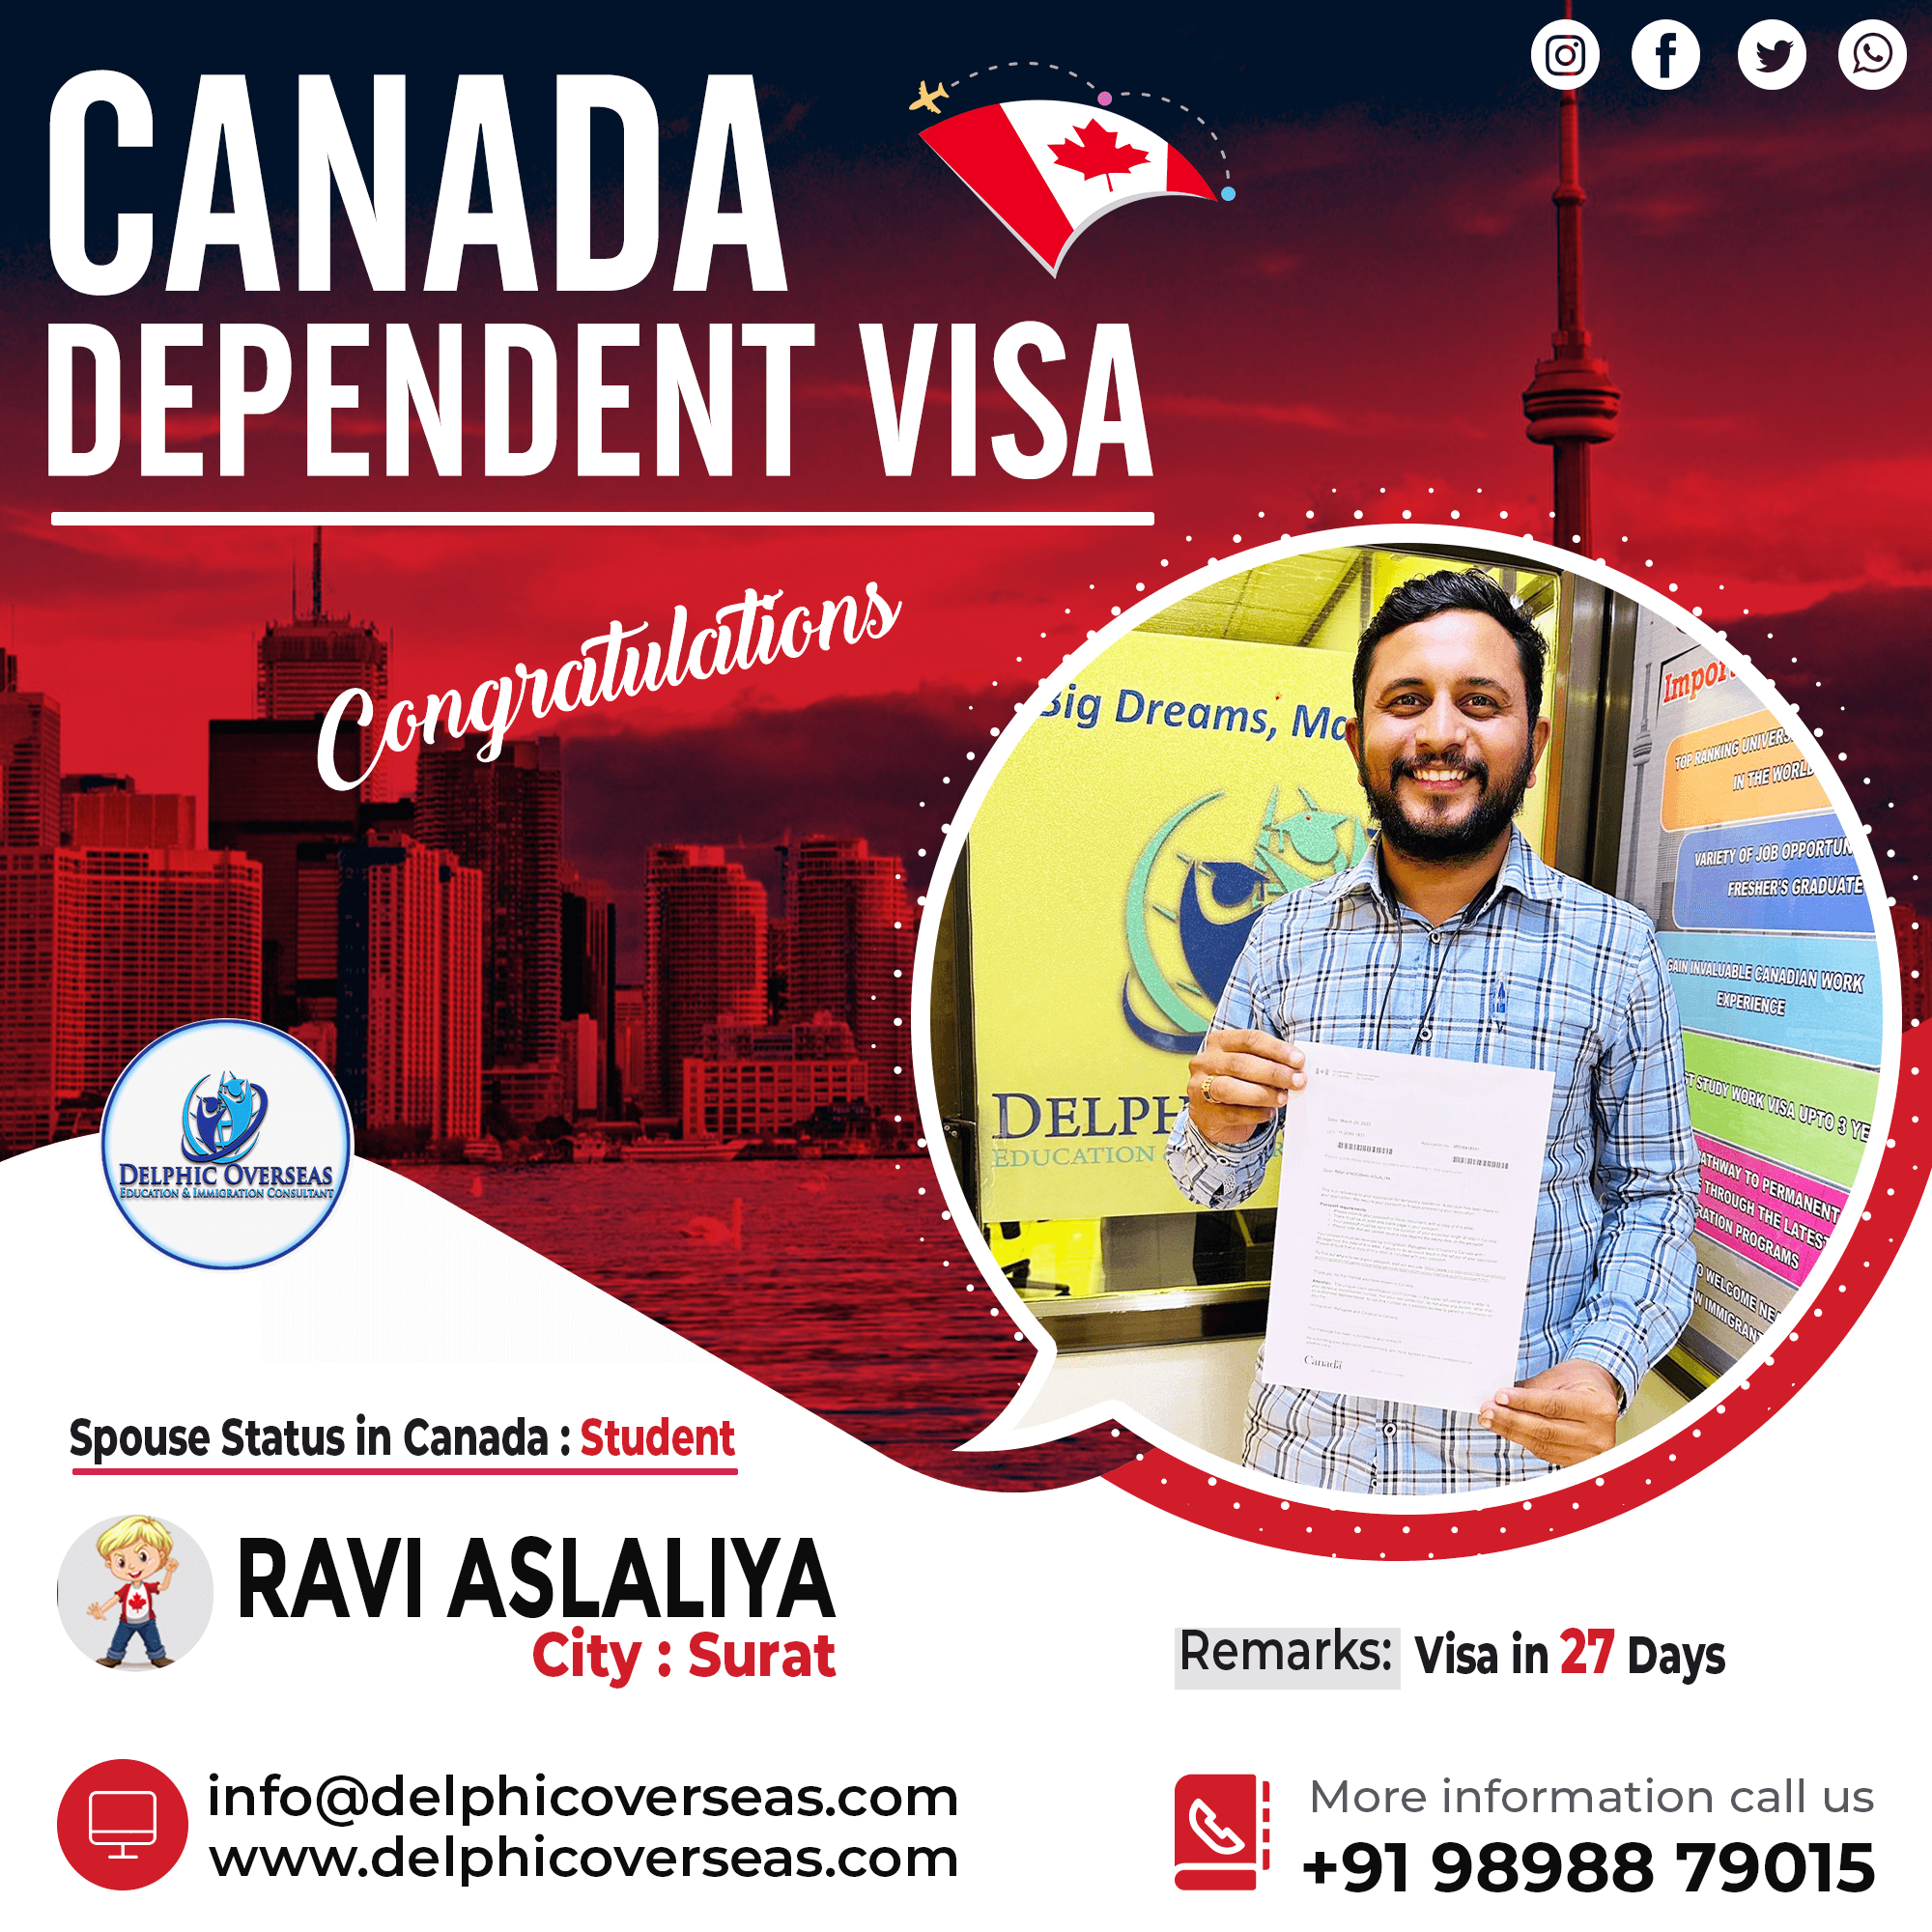 Ravi Aslaliya Canada Dependent Visa Success Story